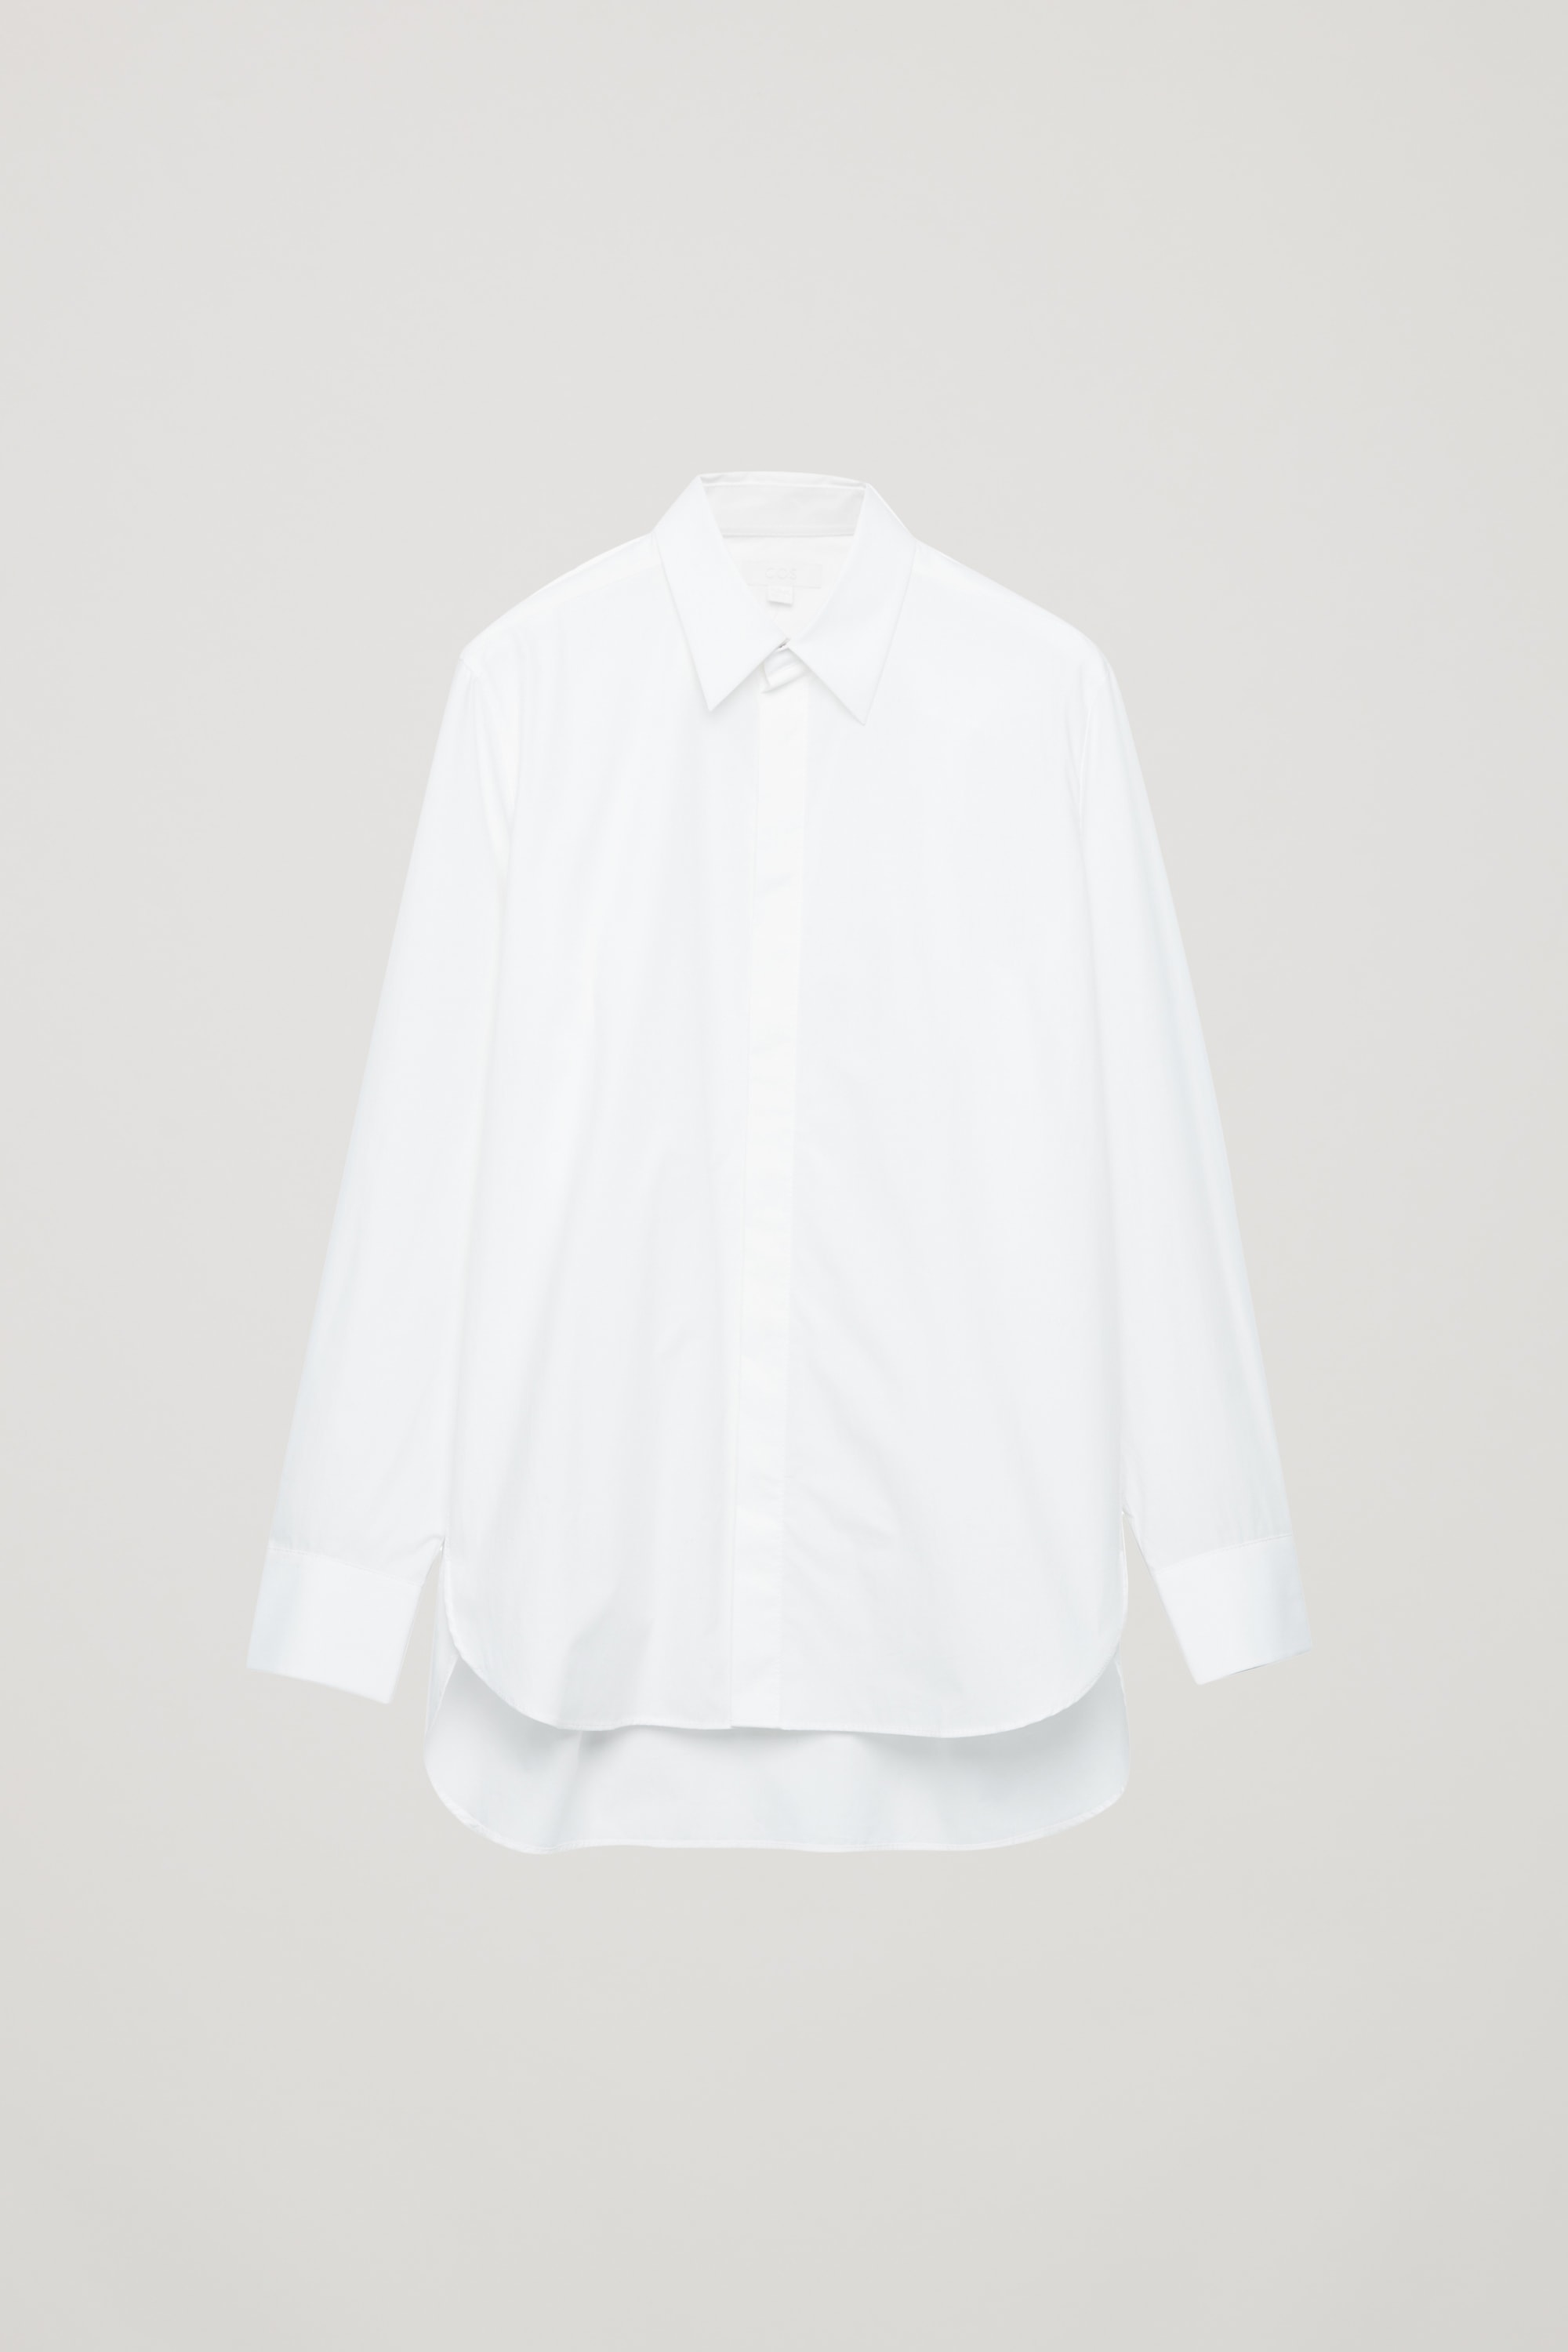 COS 推出全新 White Shirt Project 系列